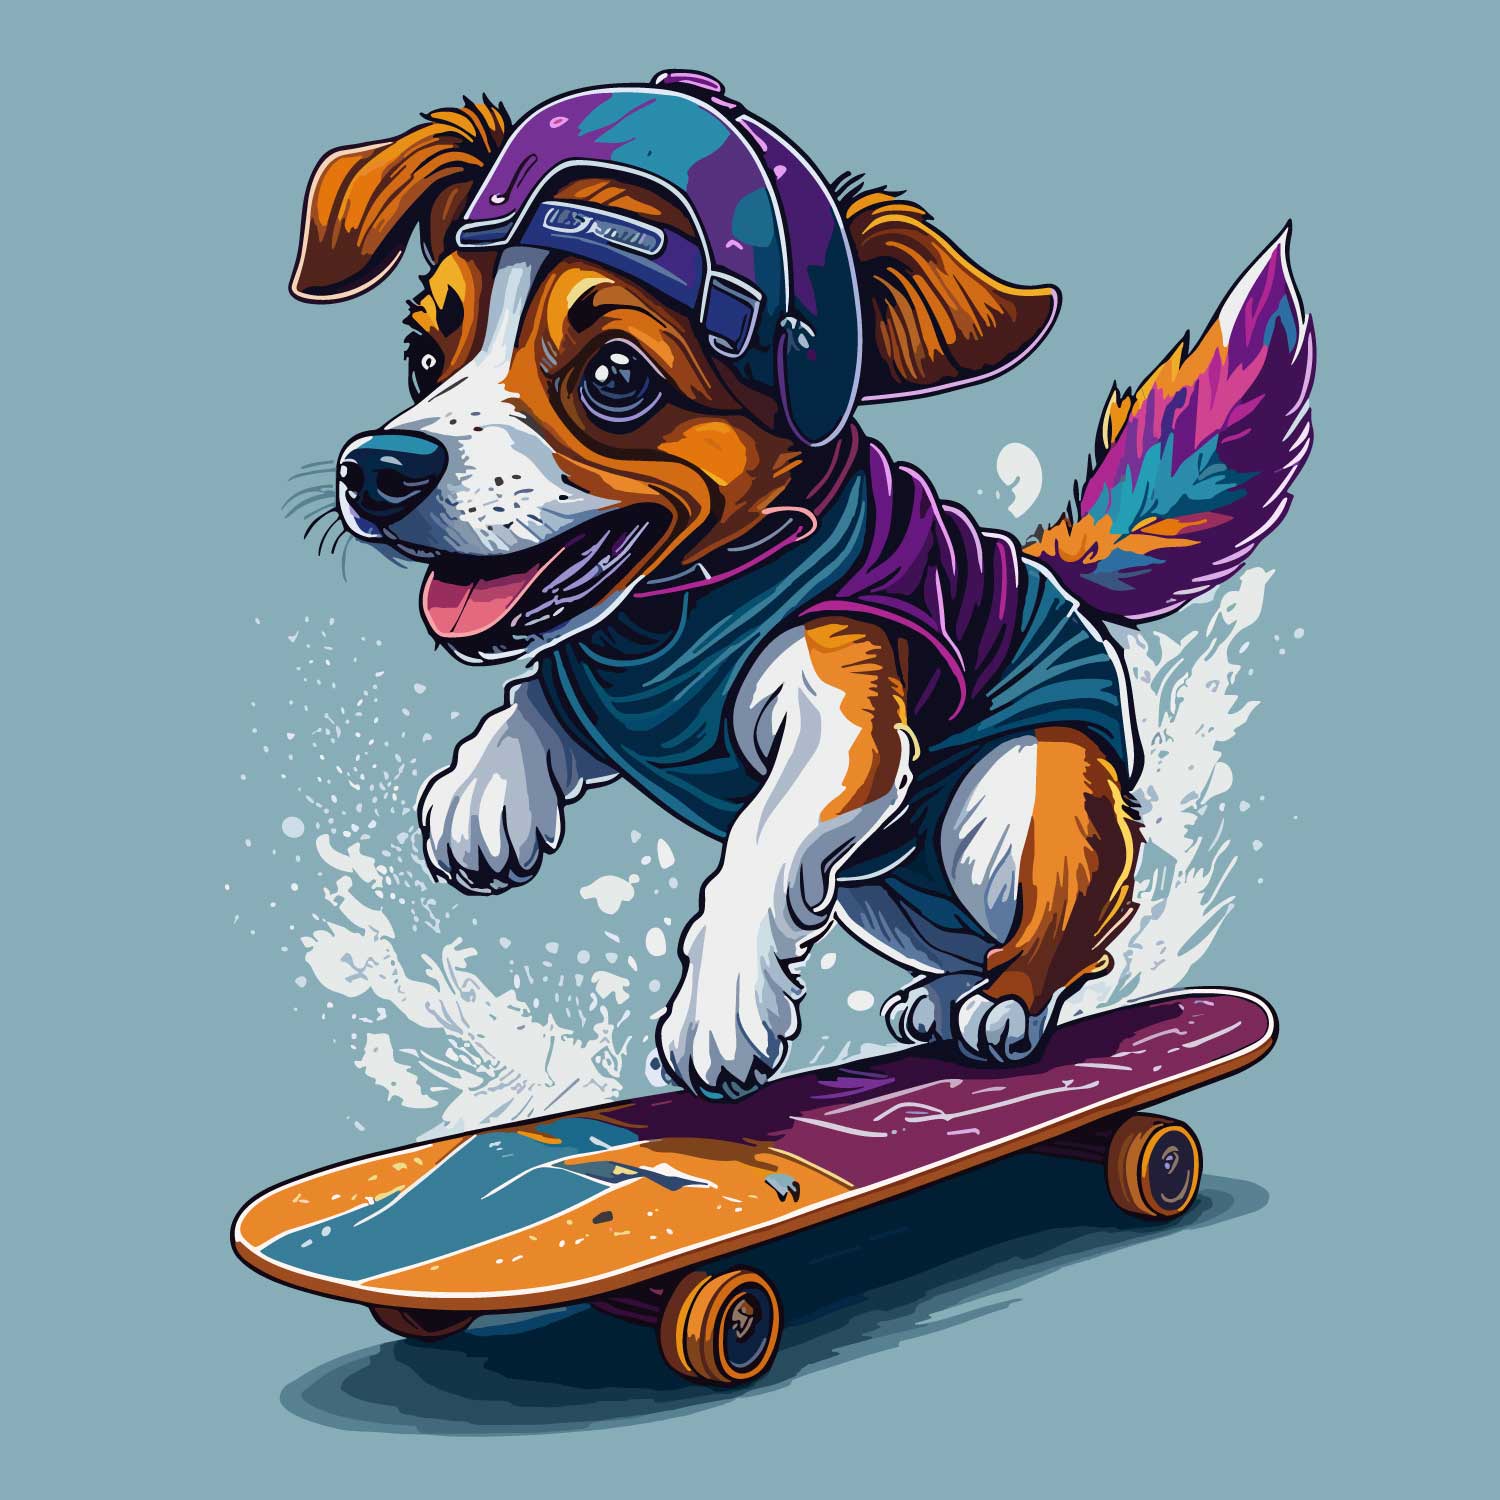 Dog Skate - Buy t-shirt designs